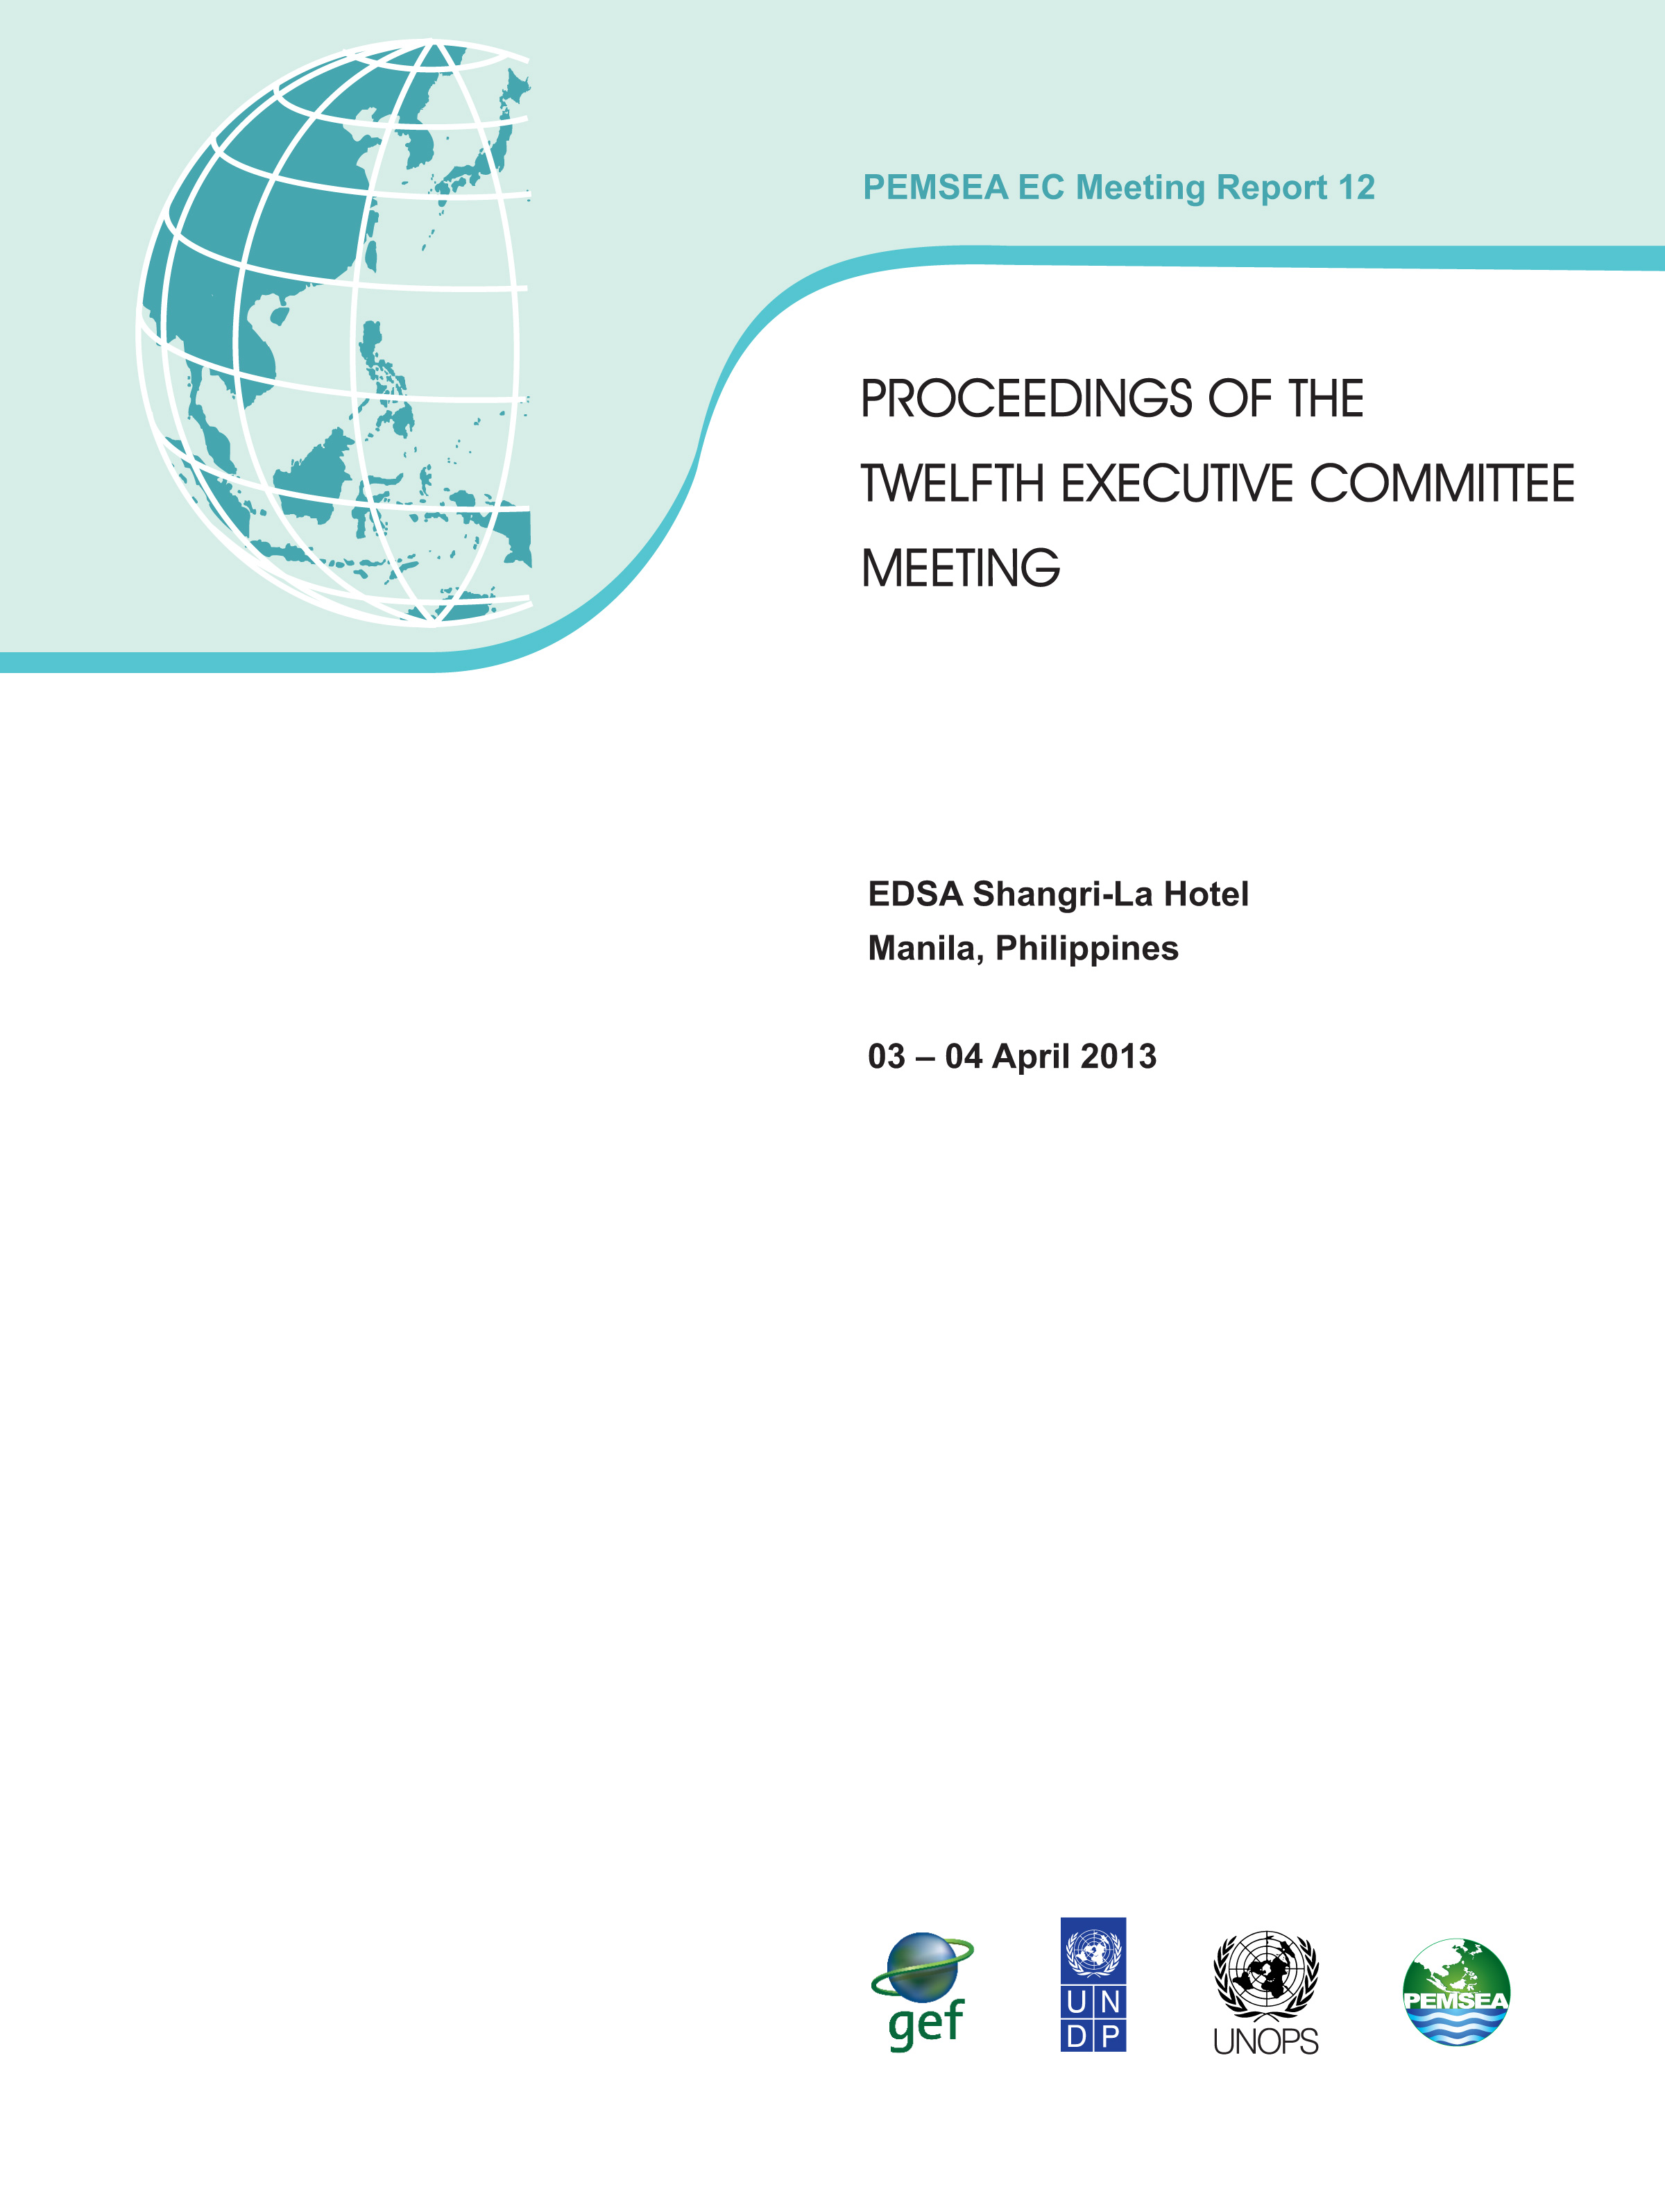 Proceedings of the Twelfth Executive Committee Meeting